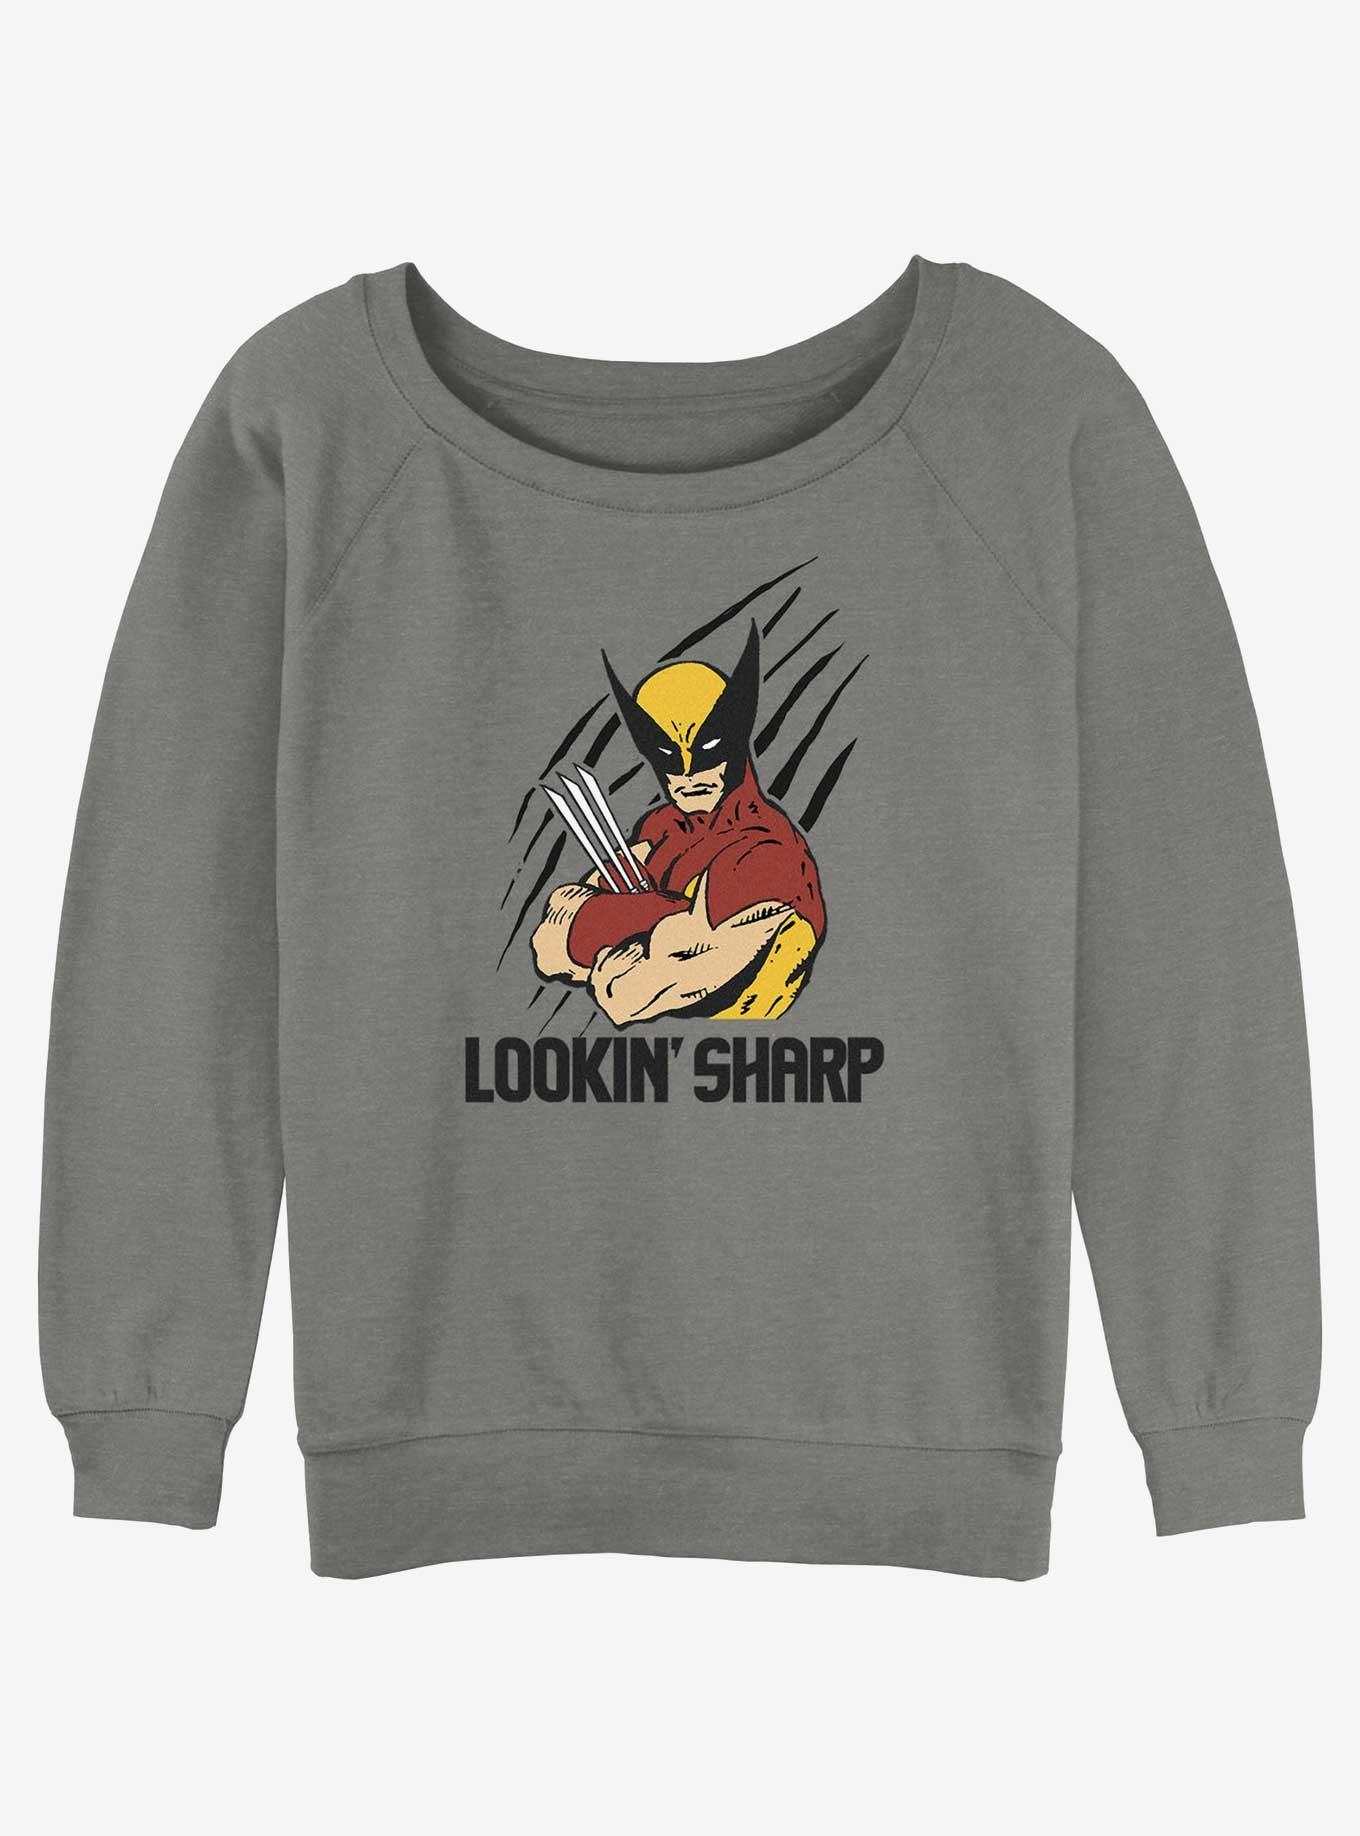 Wolverine Lookin' Sharp Girls Slouchy Sweatshirt, GRAY HTR, hi-res